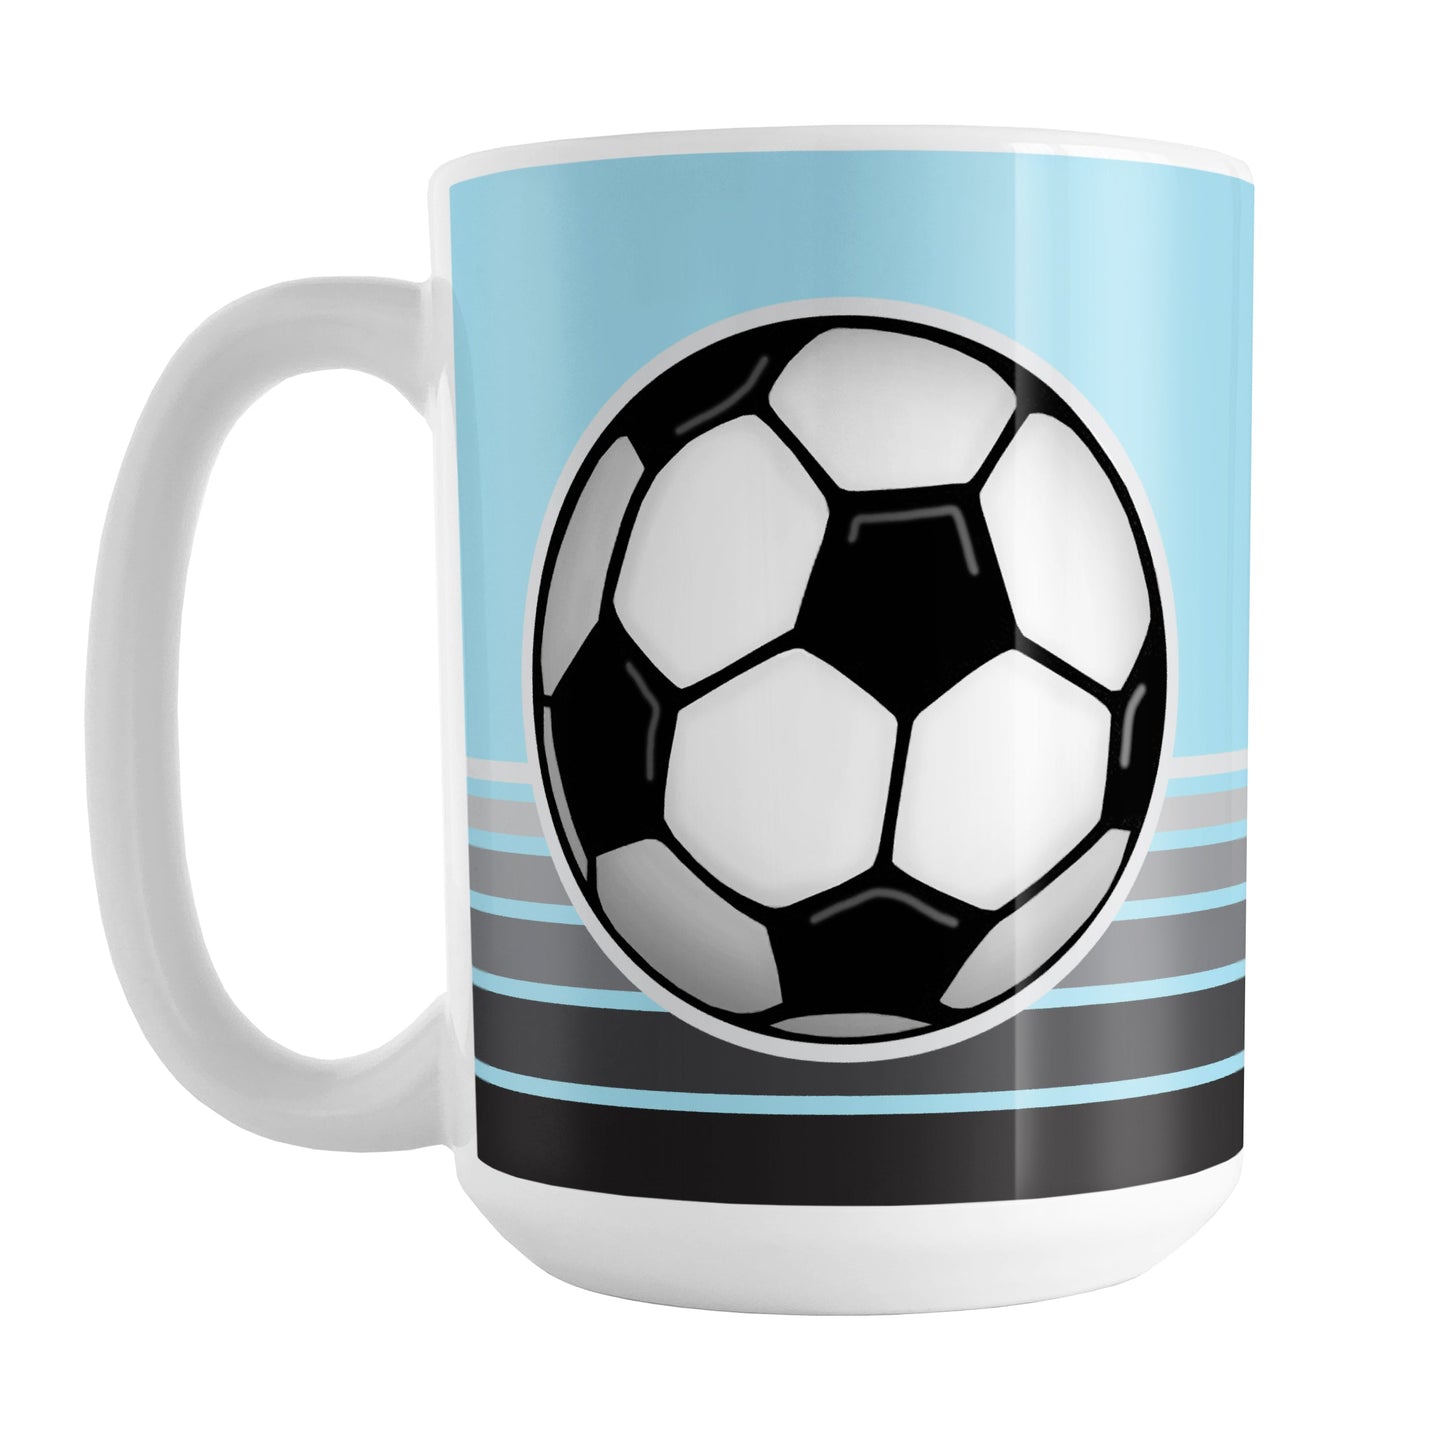 Gray Gradient Lined Blue Soccer Ball Mug (15oz) at Amy's Coffee Mugs